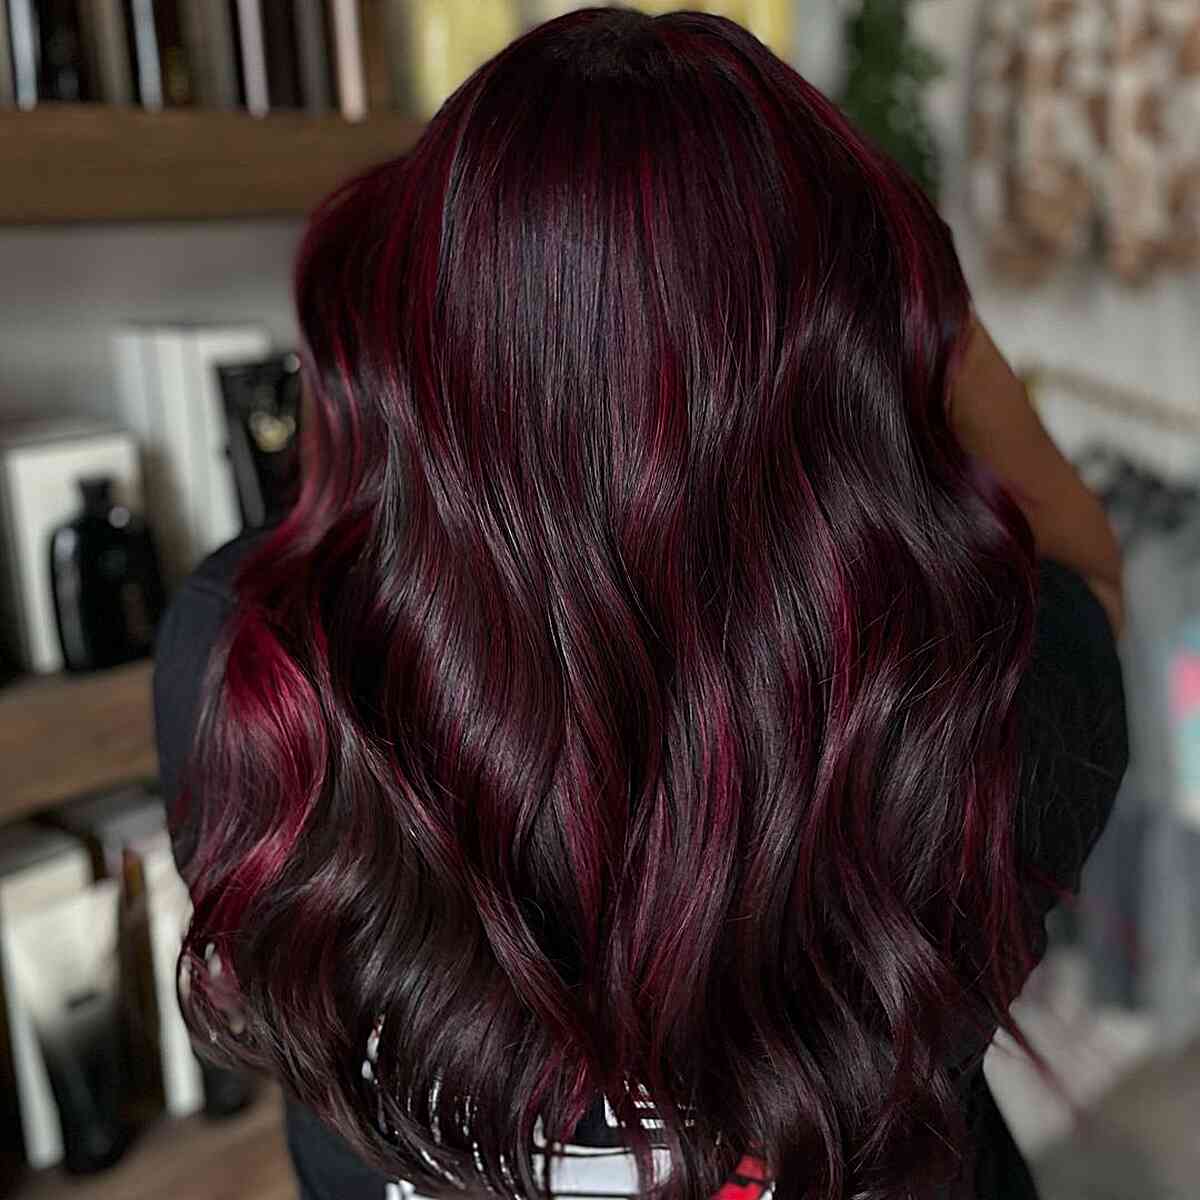 Cherry Cola Red Highlights on Long Dark Hair